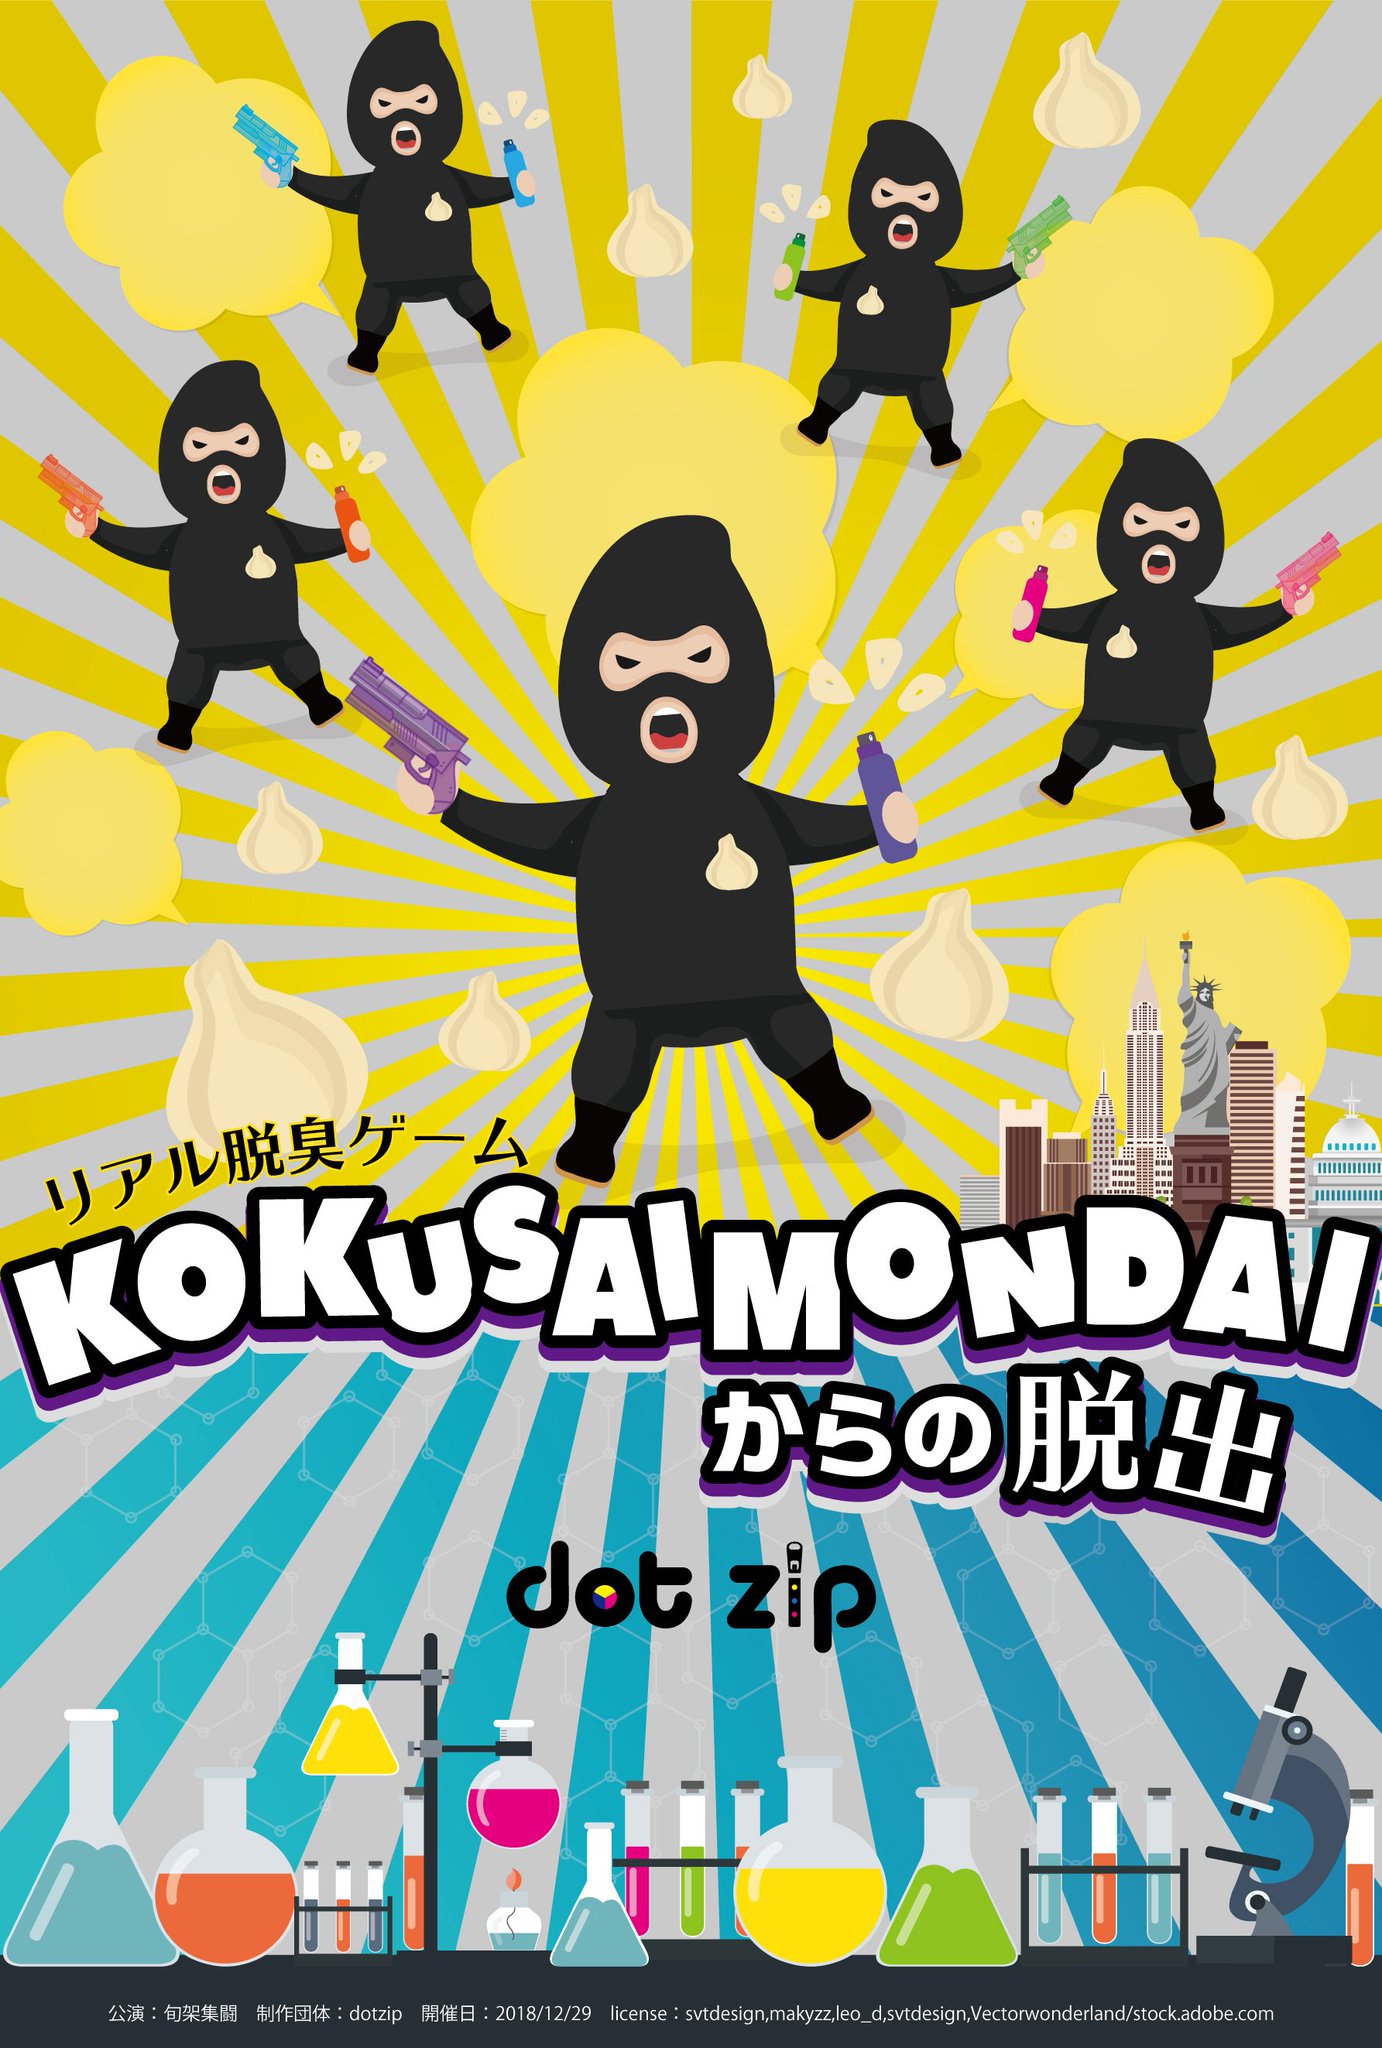 dot zip ✕ テクニコテクニカ『KOKUSAI MONDAIからの脱出』体験型謎解きゲーム